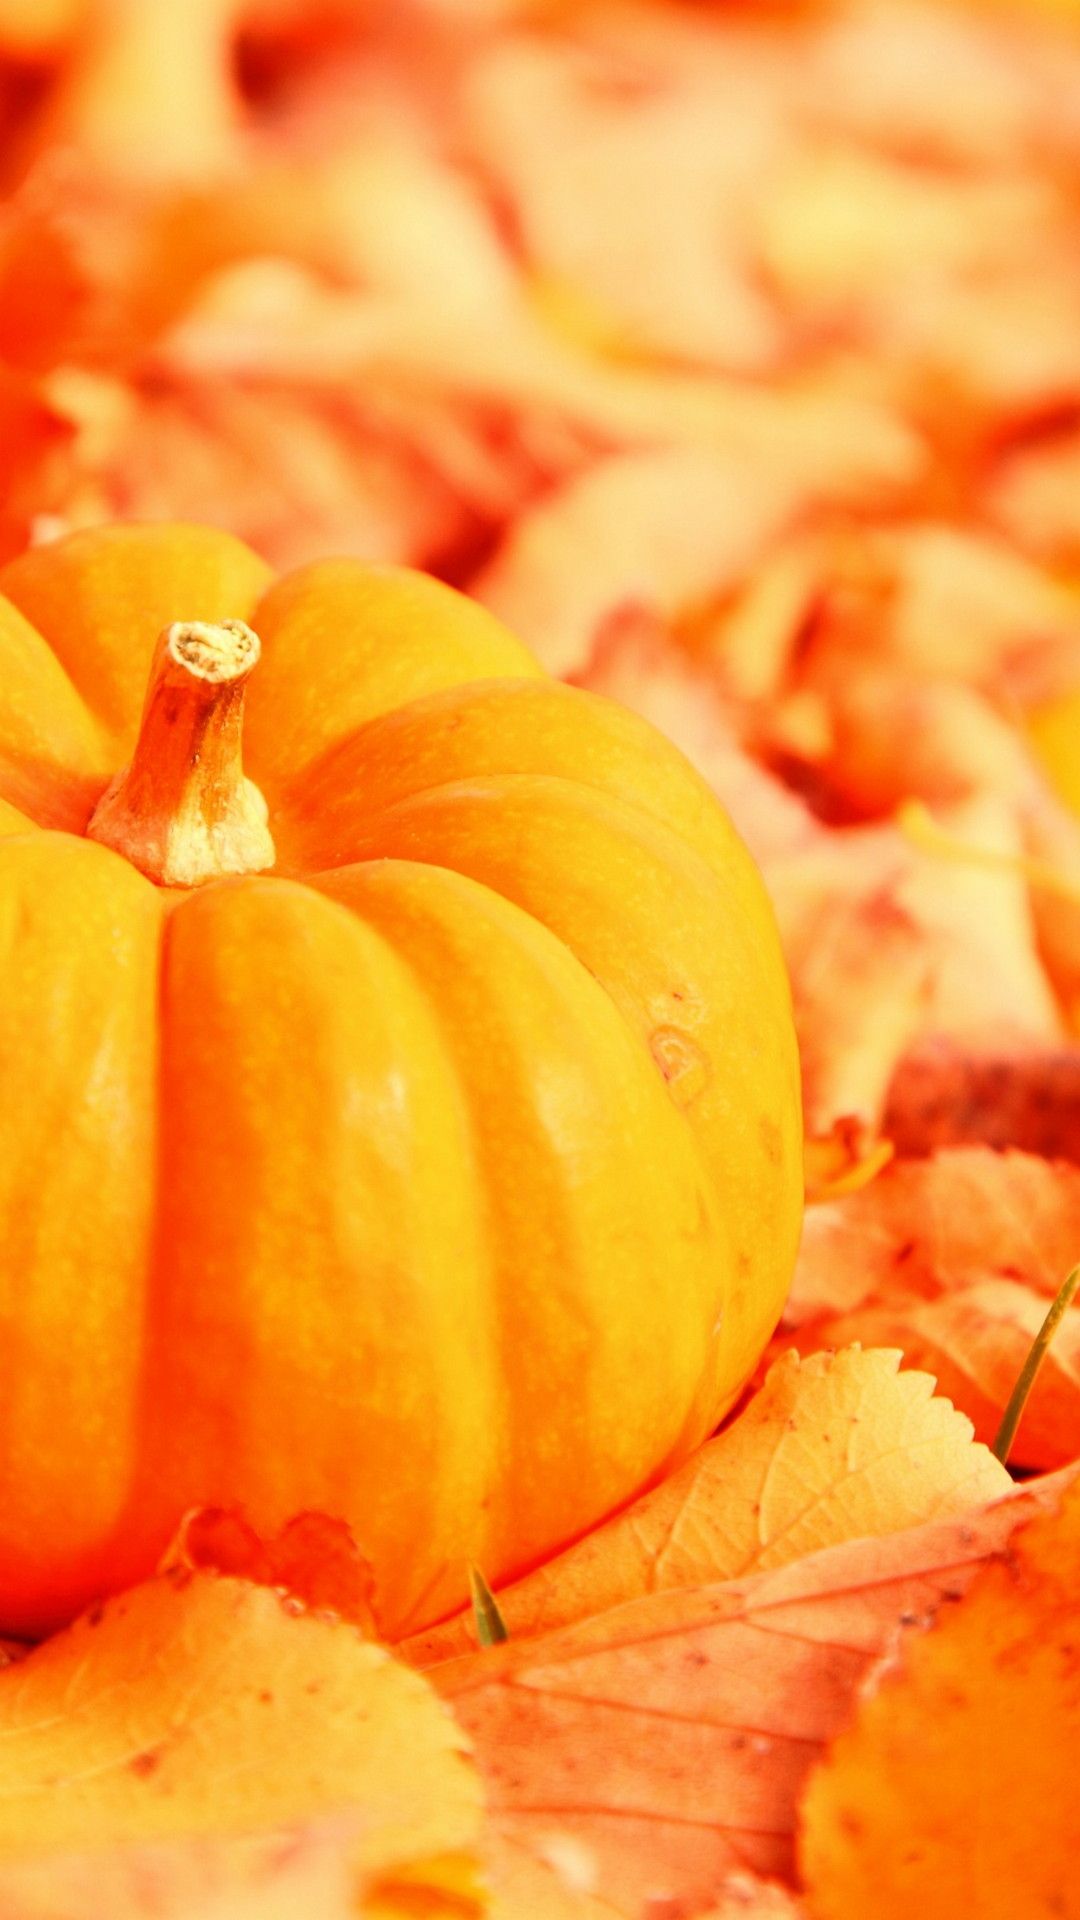 A small pumpkin on a pile of autumn leaves. - Cute, cute iPhone